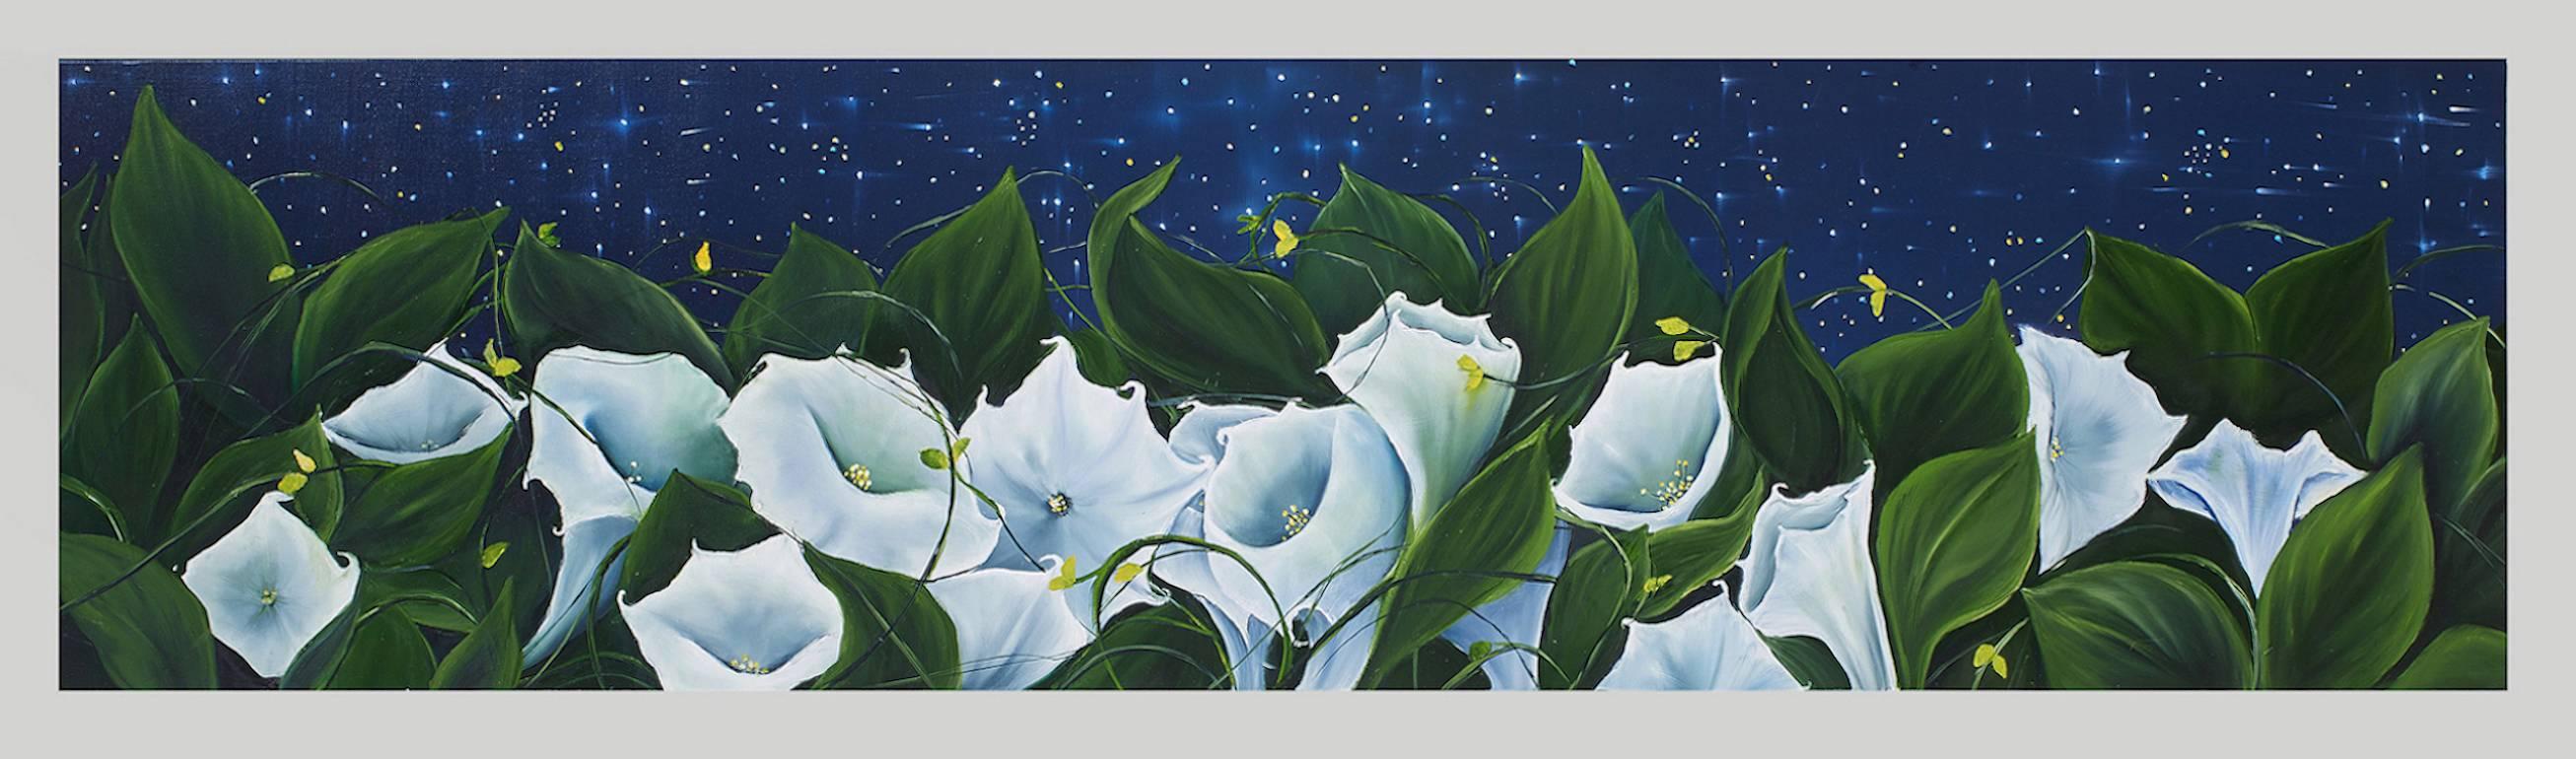 Allison Green Figurative Painting - Moon Flowers 